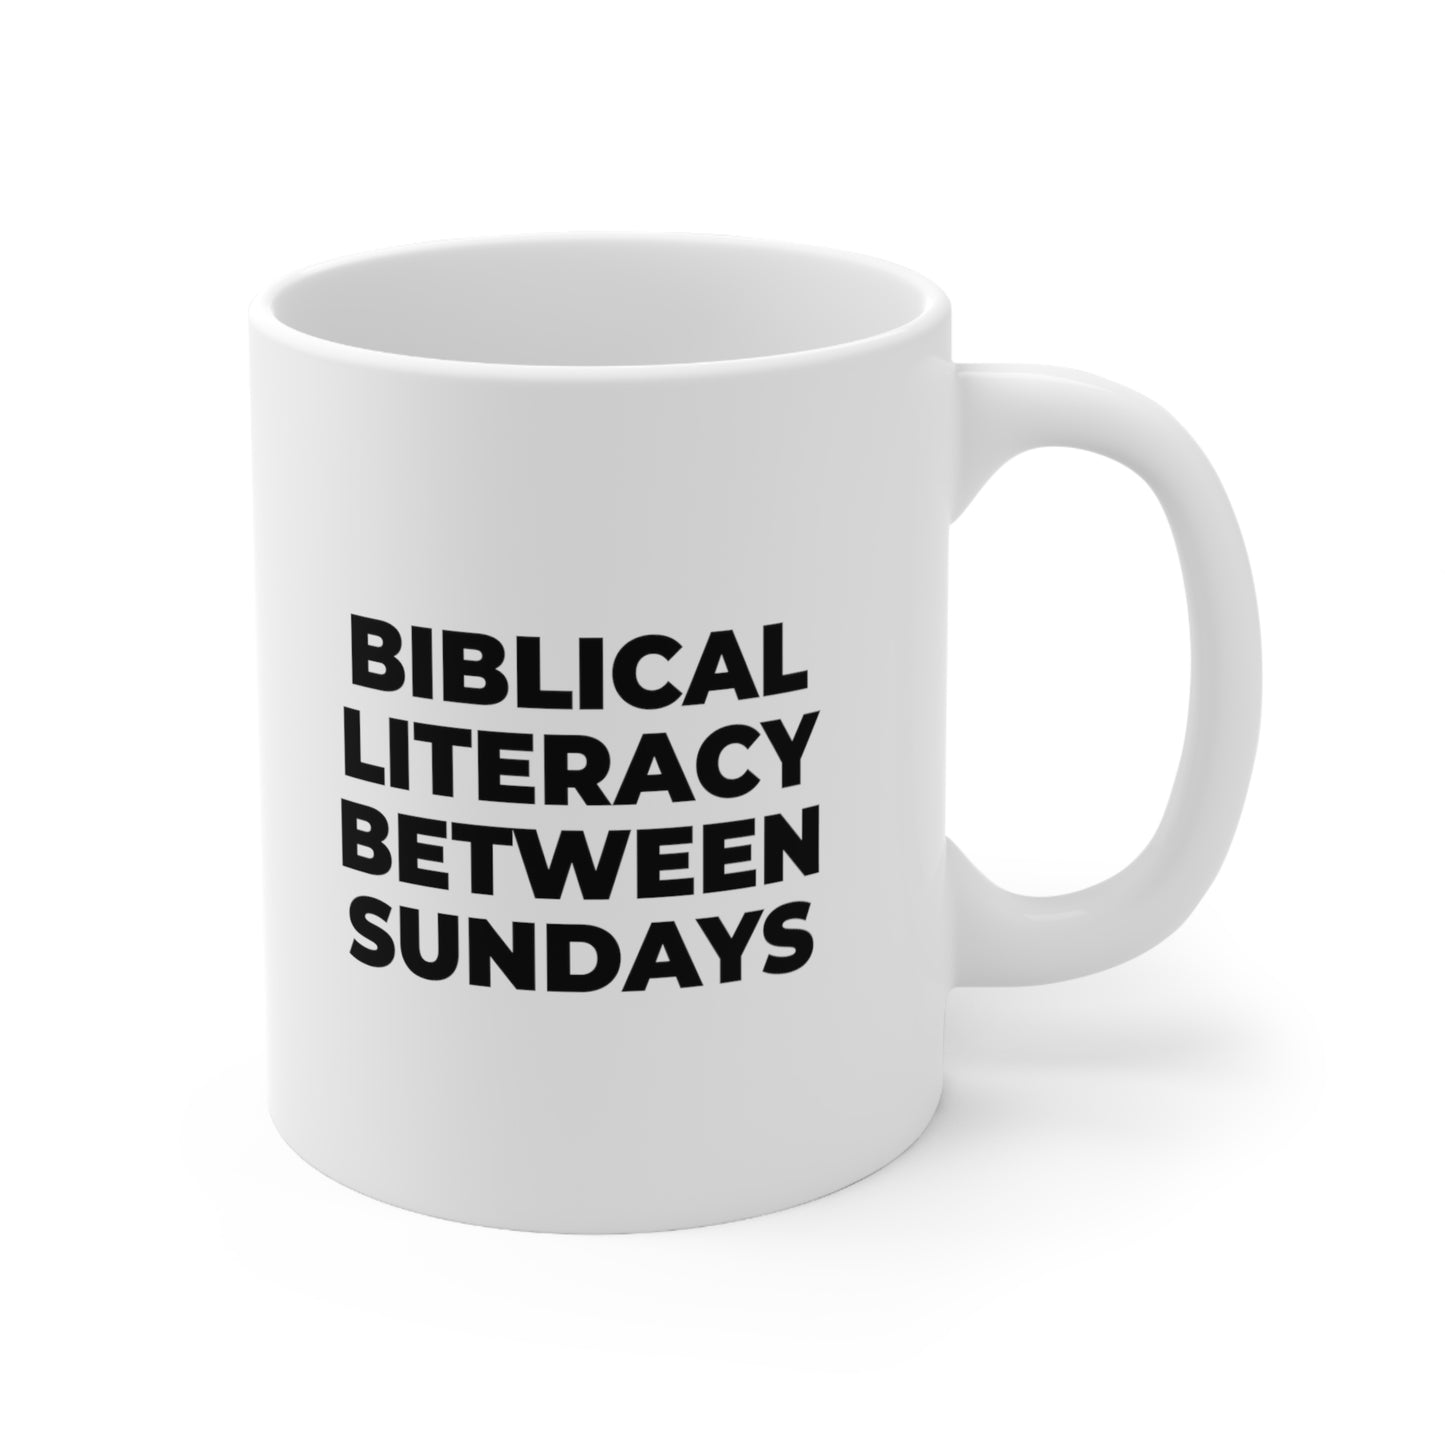 Biblical Literacy Between Sundays Coffee Mug 11oz